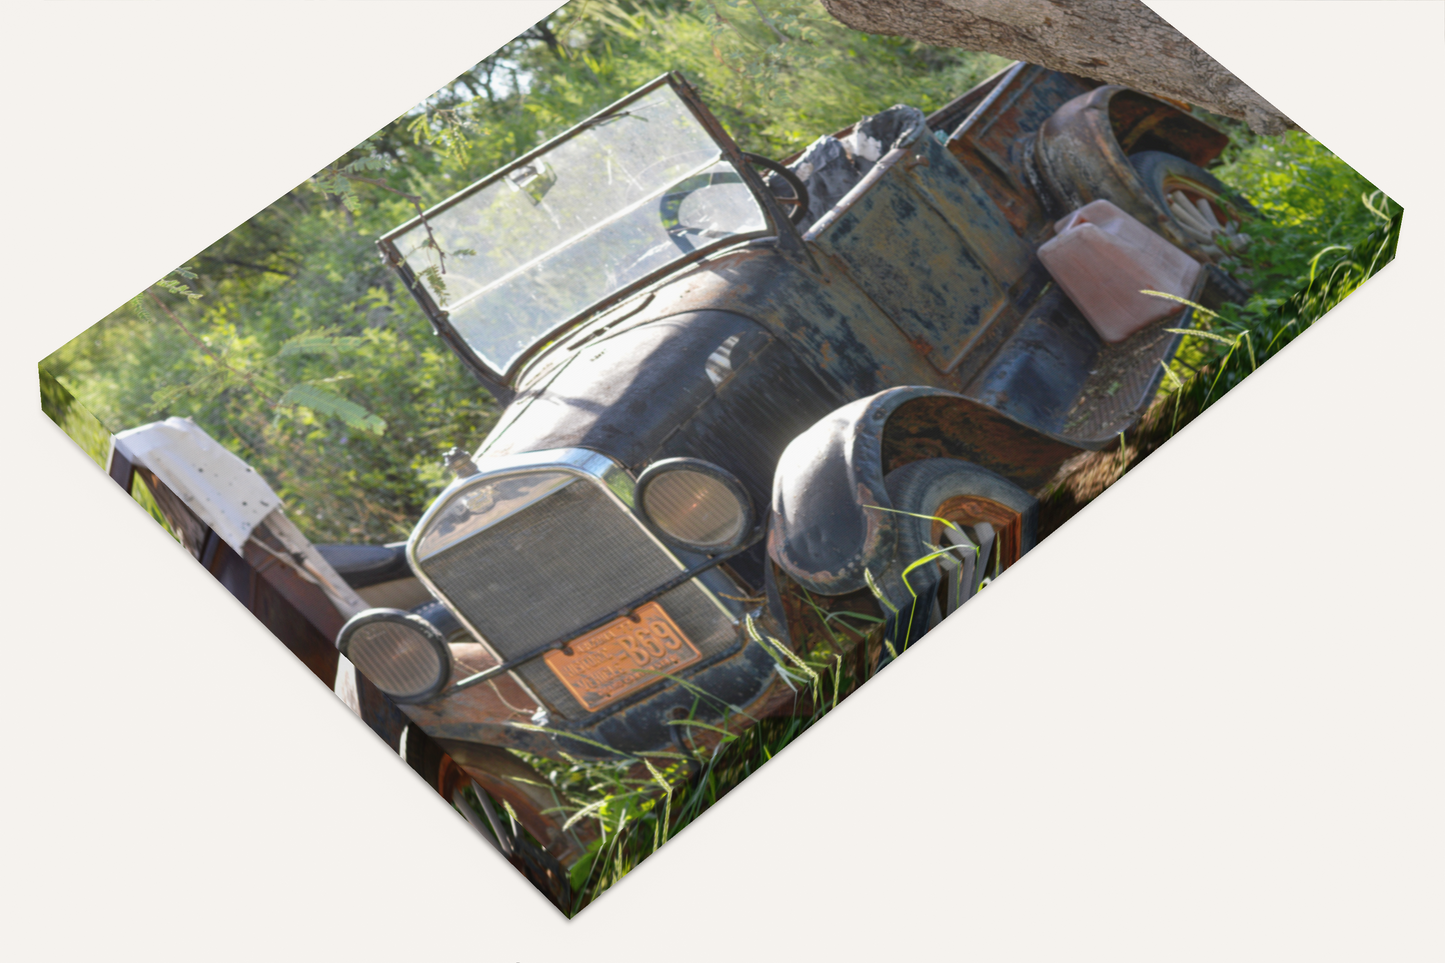 Travel antique car junkyard photography canvas print